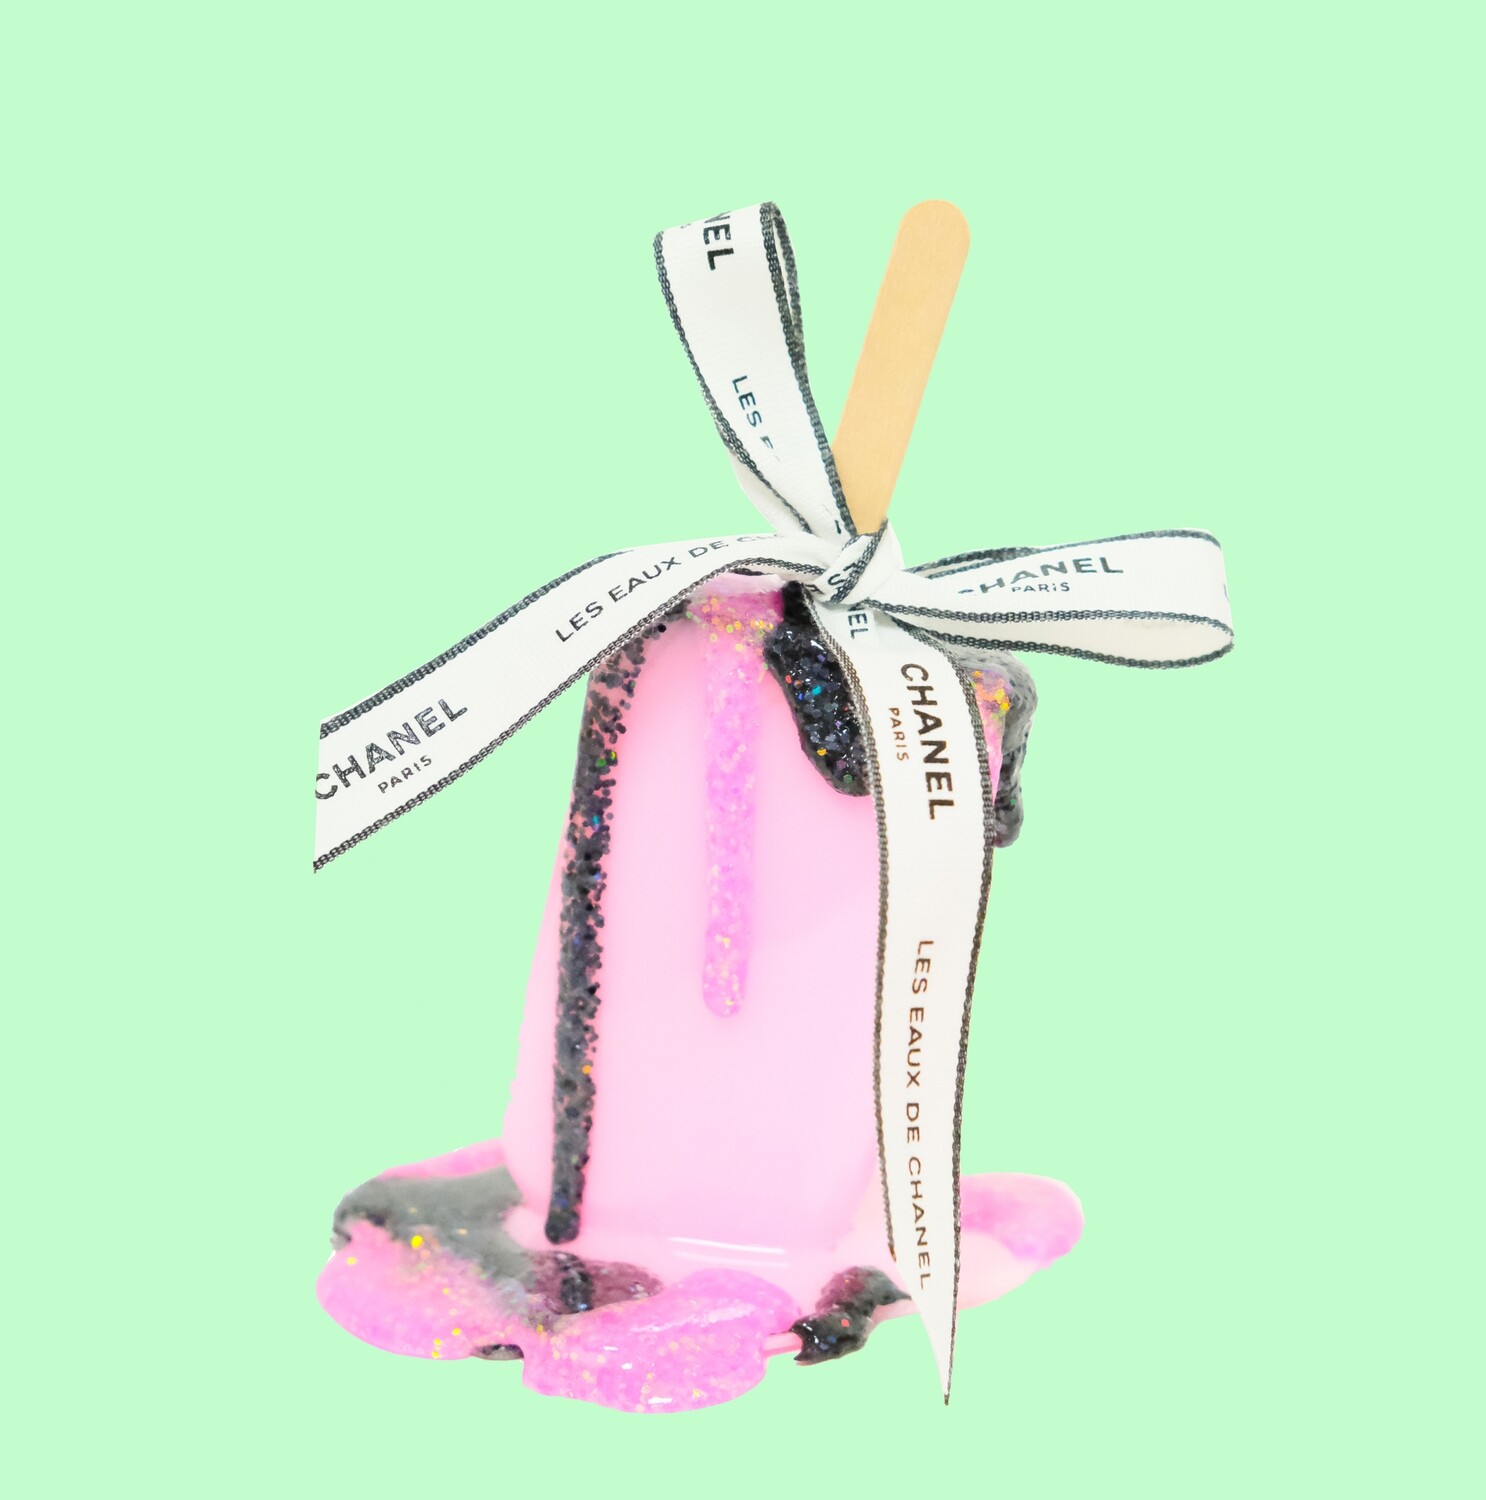 Melting Popsicle Art - Pantone 182c Pop 9/10 - Original Melting Pops